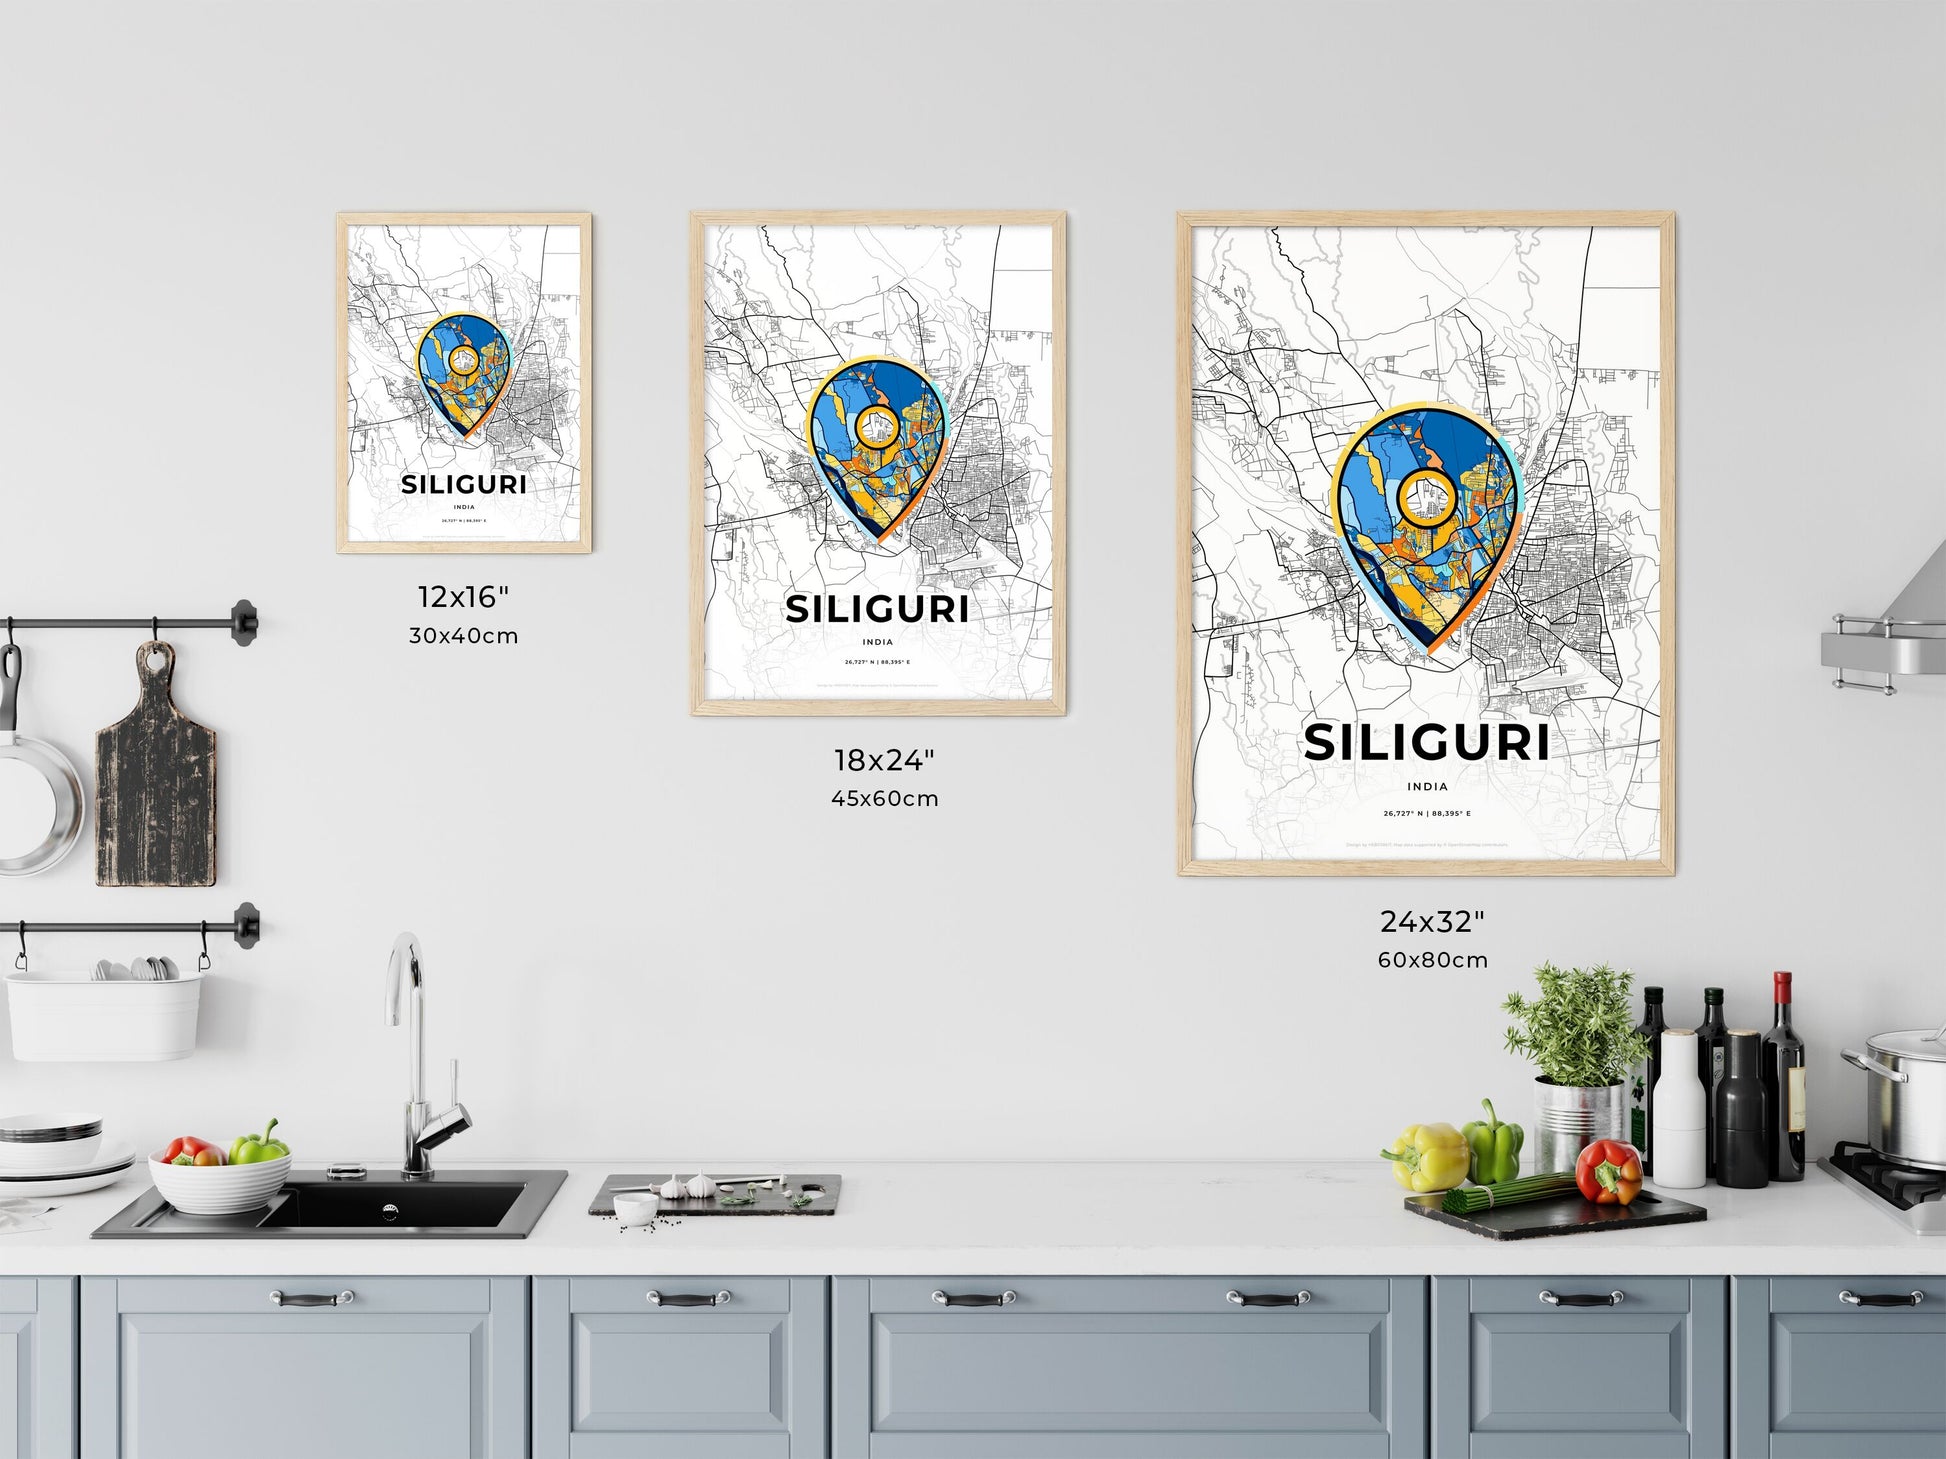 SILIGURI INDIA minimal art map with a colorful icon.